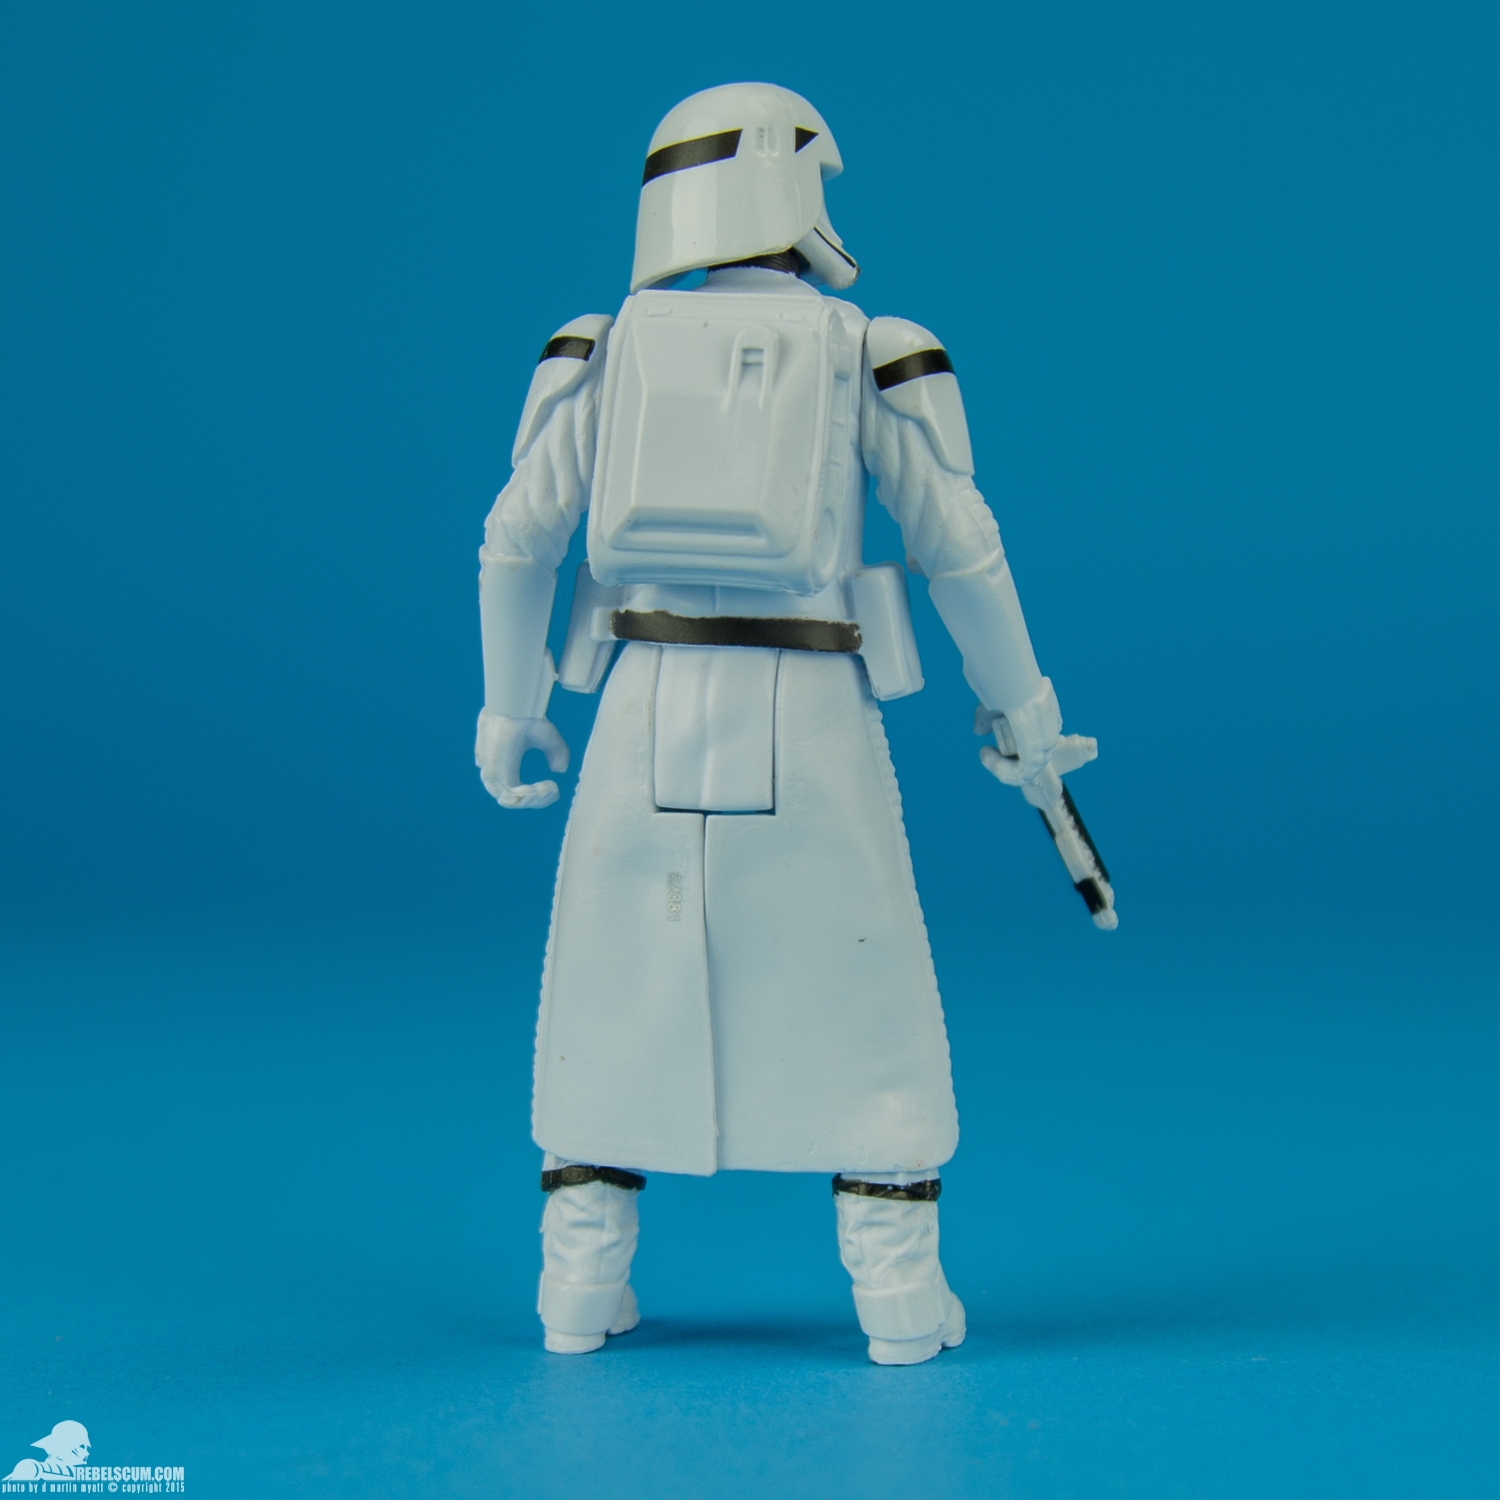 Fist-Order-Snowtrooper-The-Force-Awakens-Hasbro-006.jpg